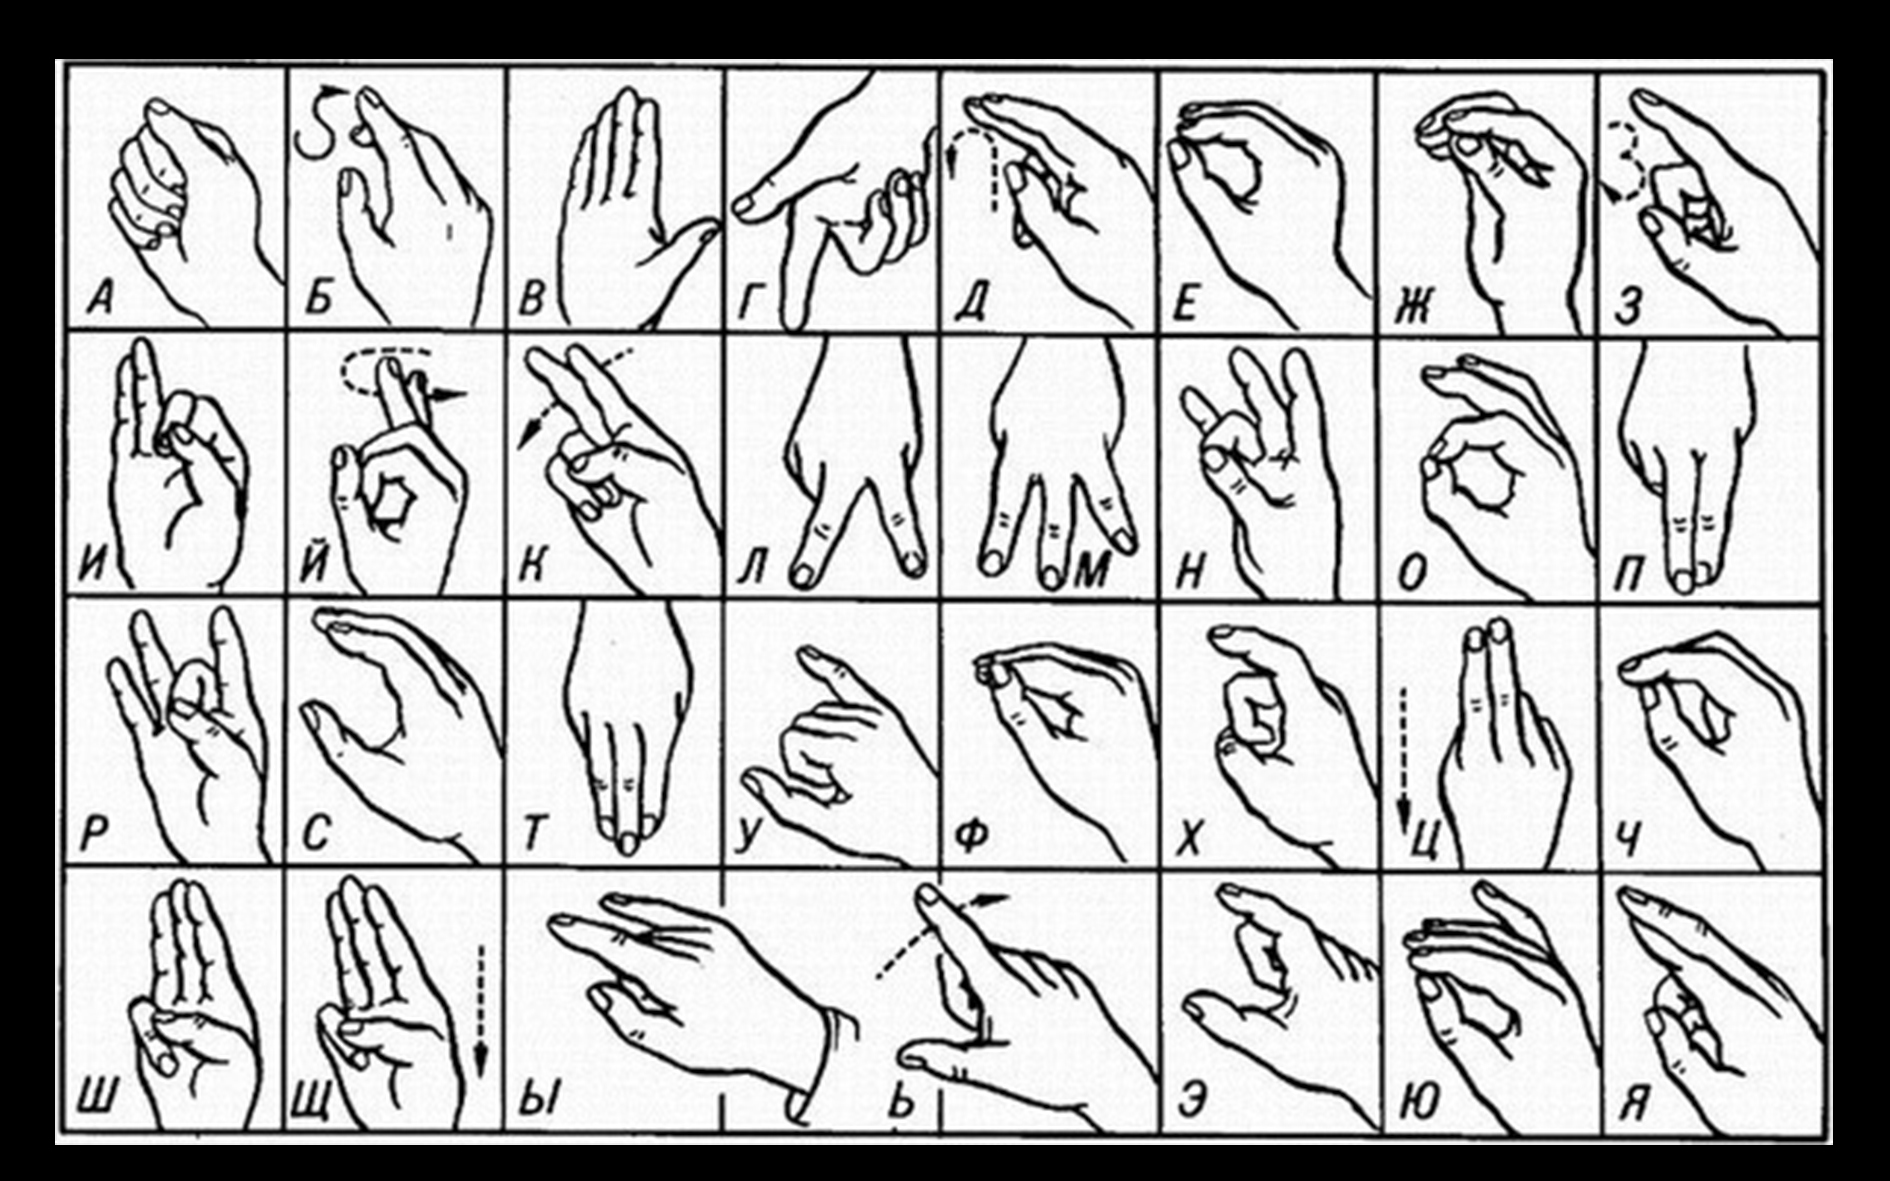 Речь глухонемых. Дактильная русская (ручная) Азбука глухих. Азбука жестового языка для глухонемых. Дактиль язык жестов алфавит. Дактиль Азбука для глухих.